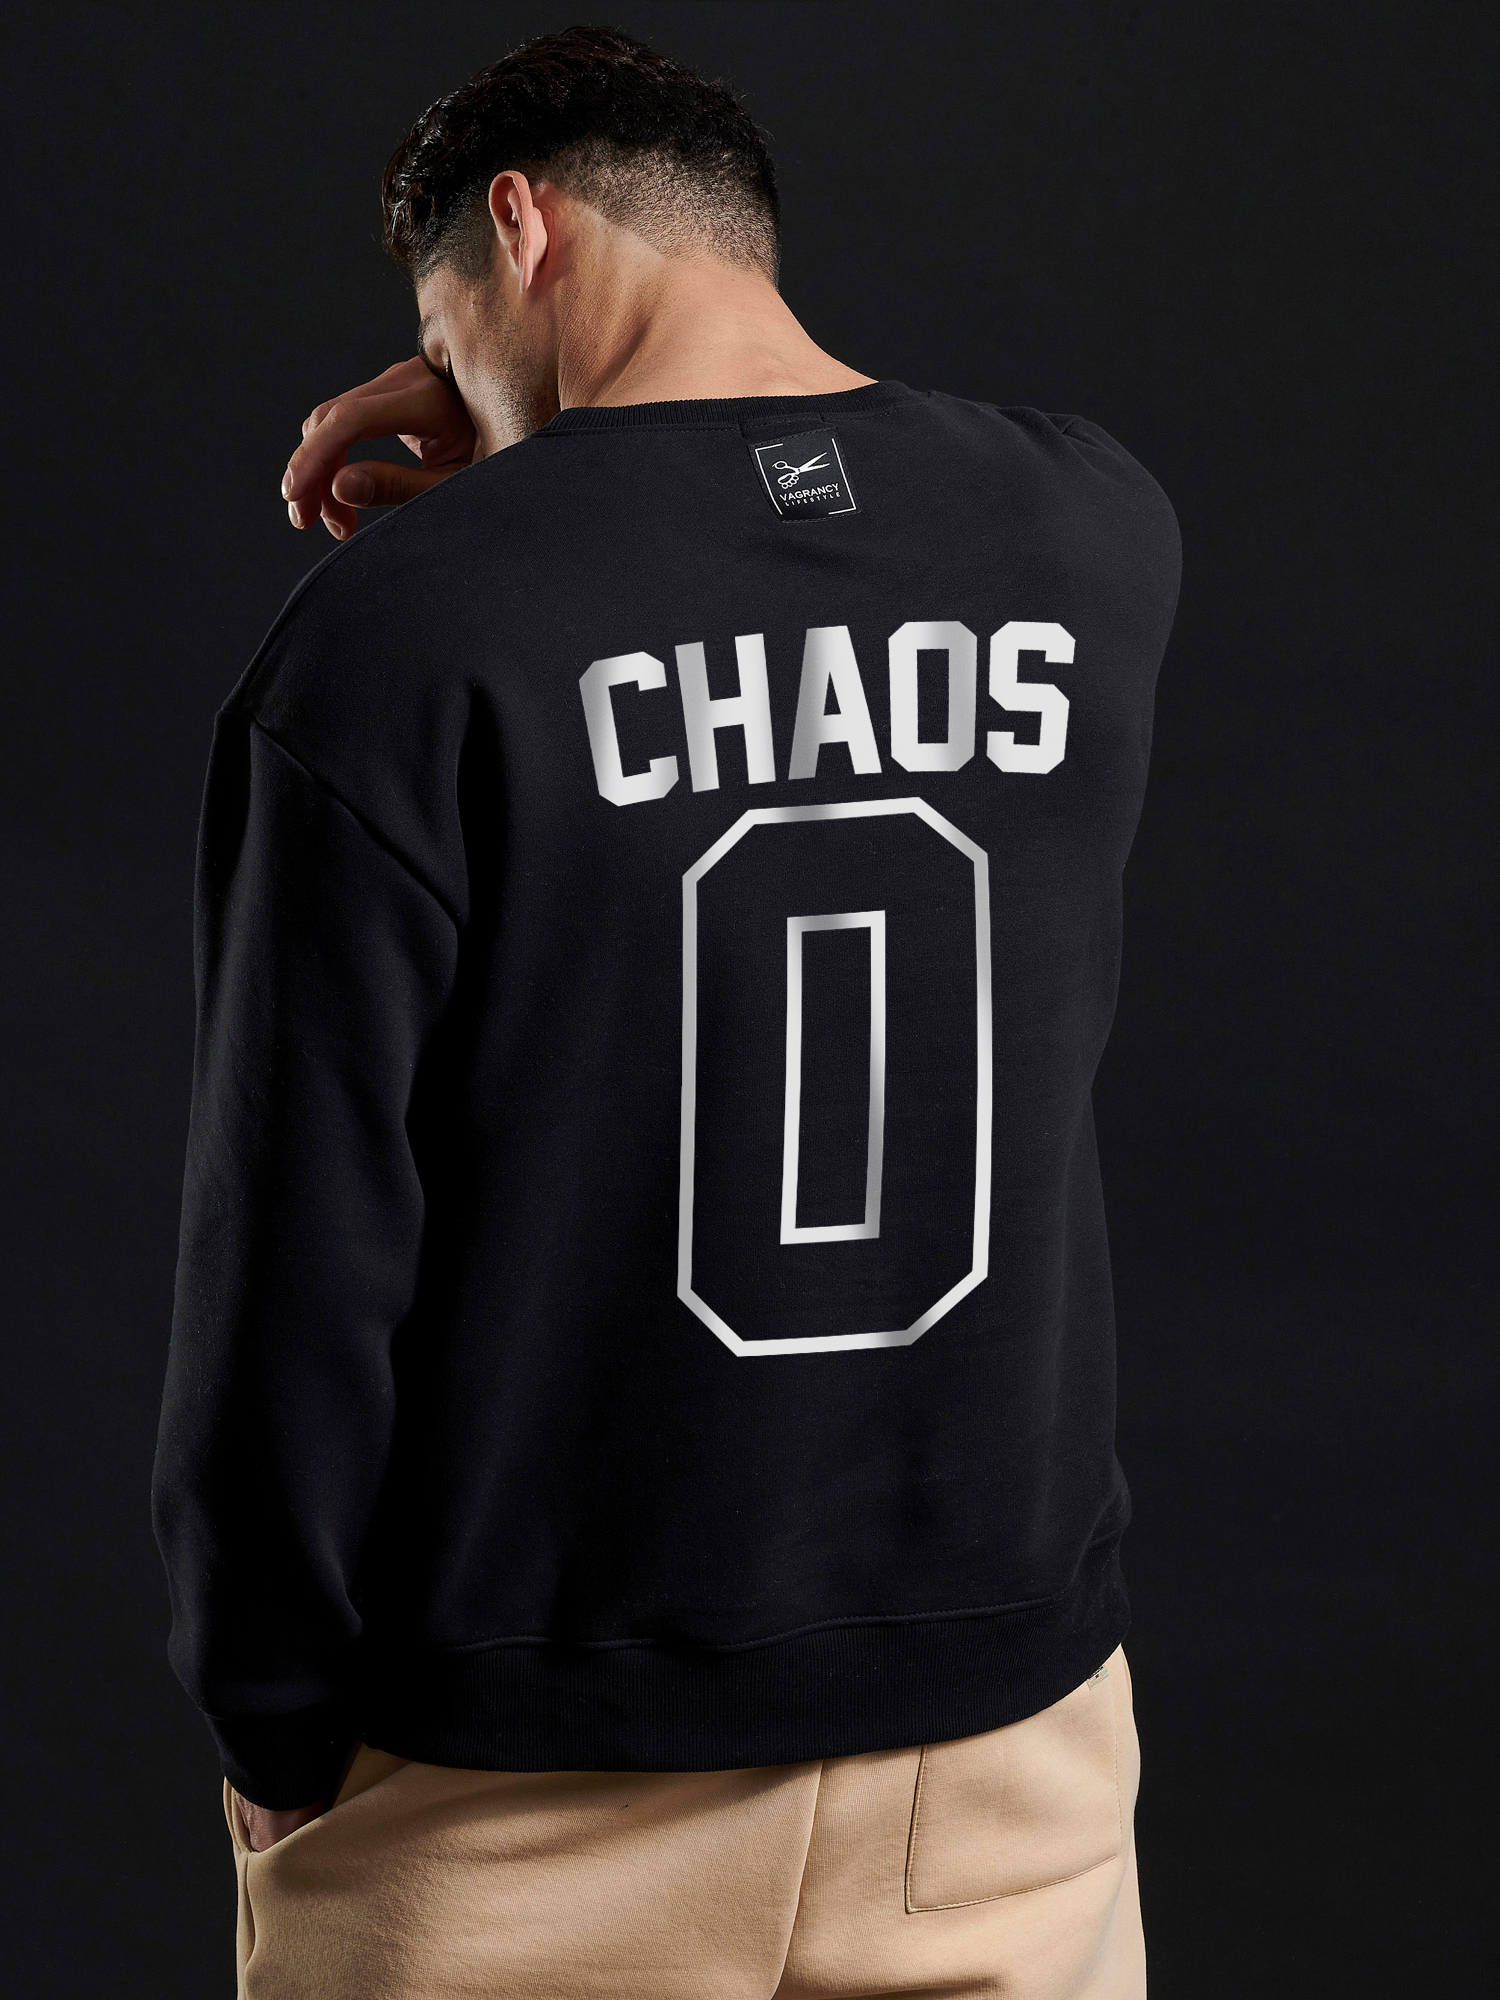 0 chaos sweatshirt